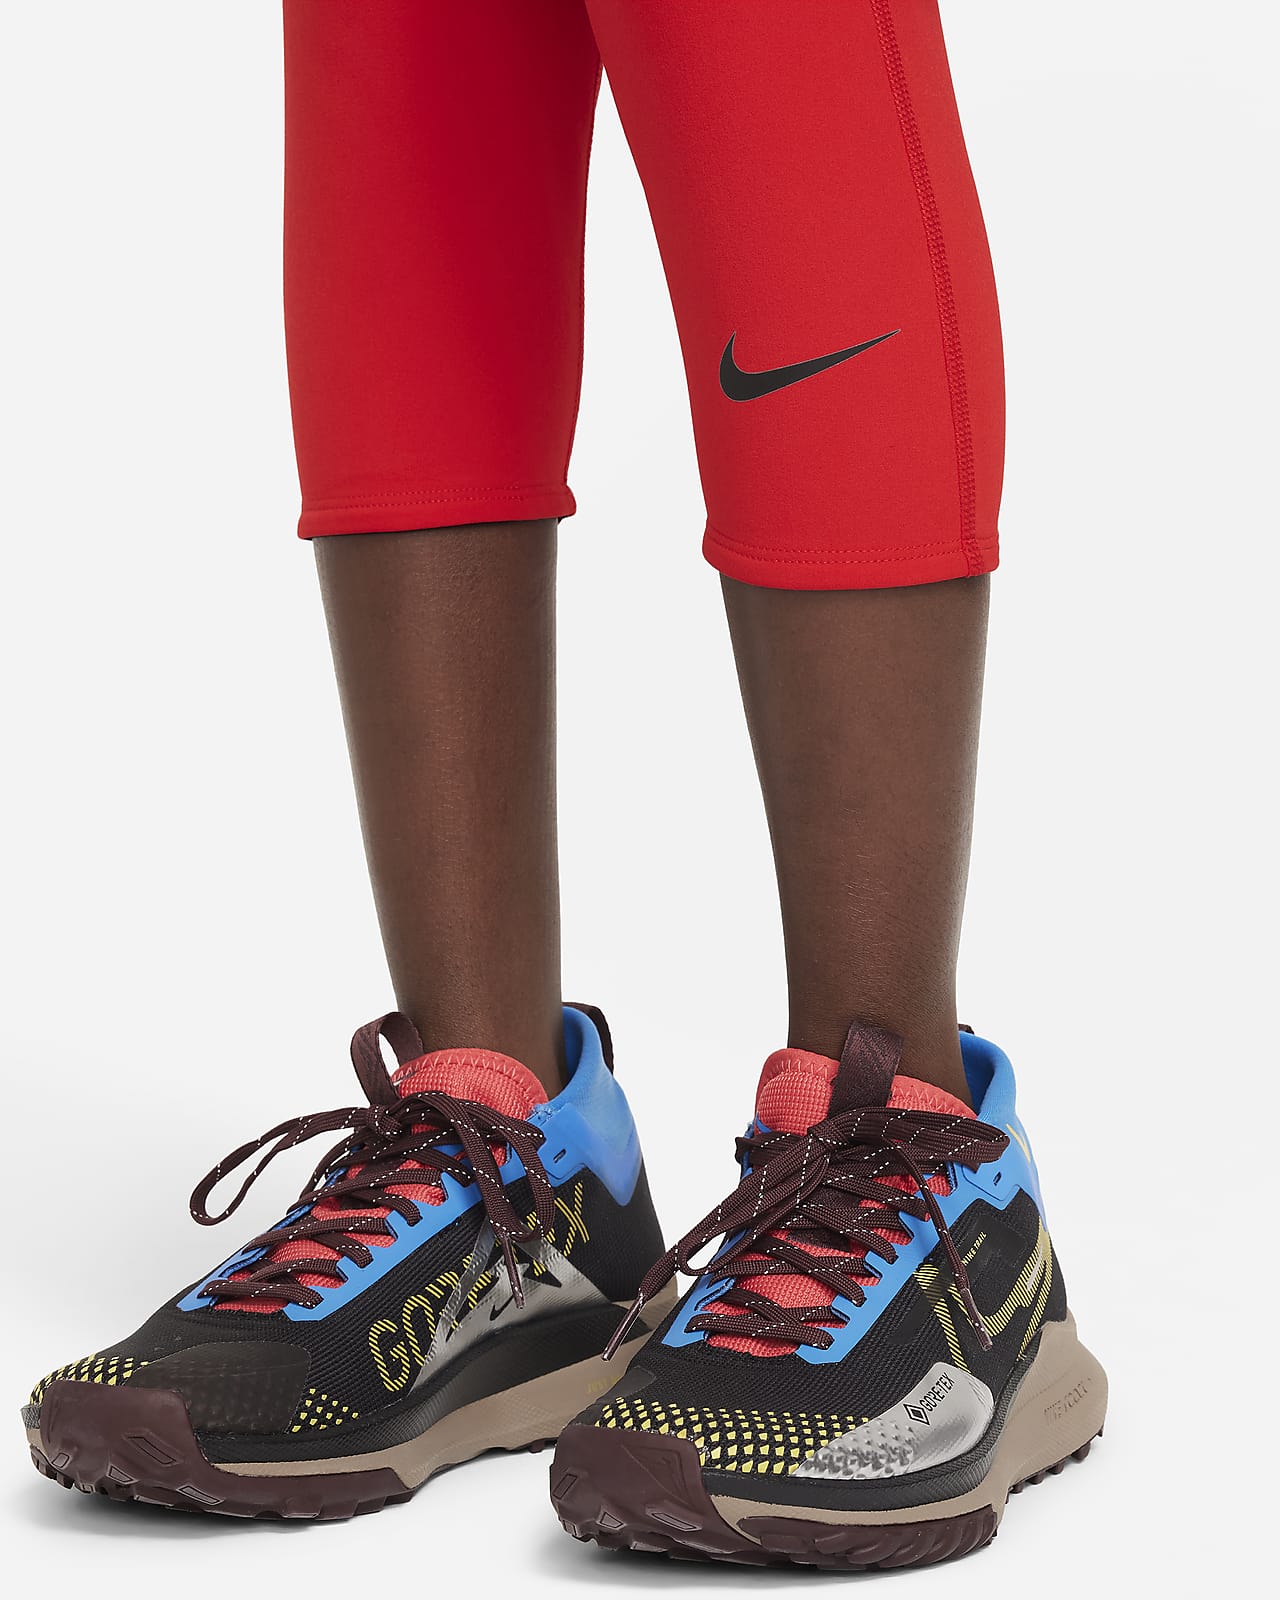 Nike Pro Dri-FIT Big Kids' (Boys') 3/4-Length Tights. Nike.com